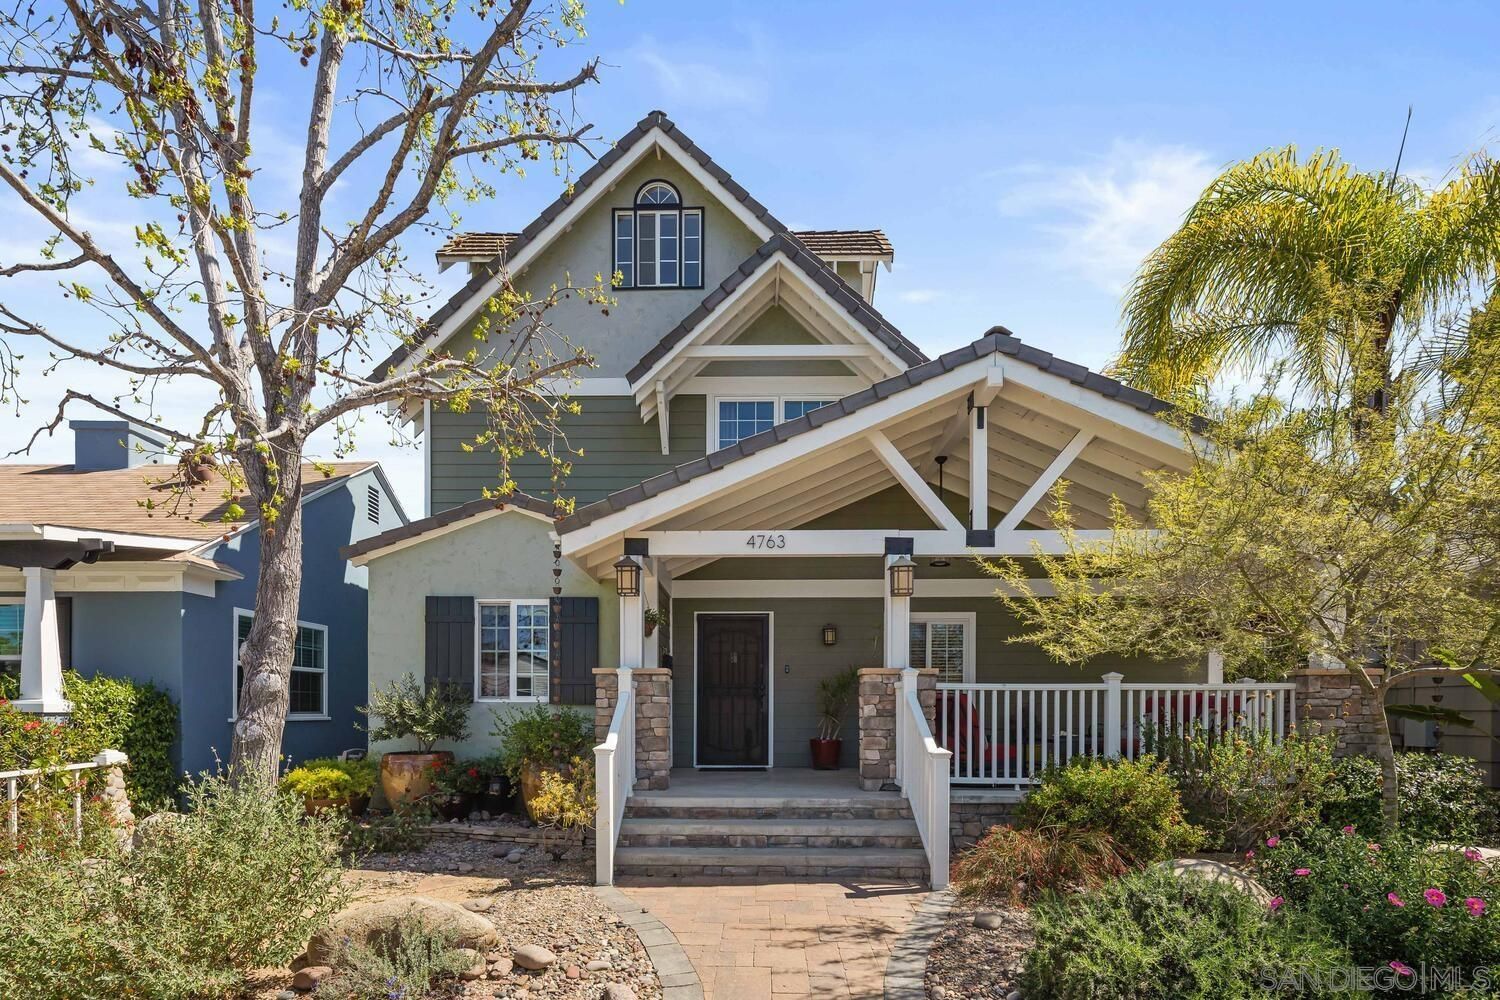 Main Photo: TALMADGE House for sale : 5 bedrooms : 4763 Winona Avenue in San Diego